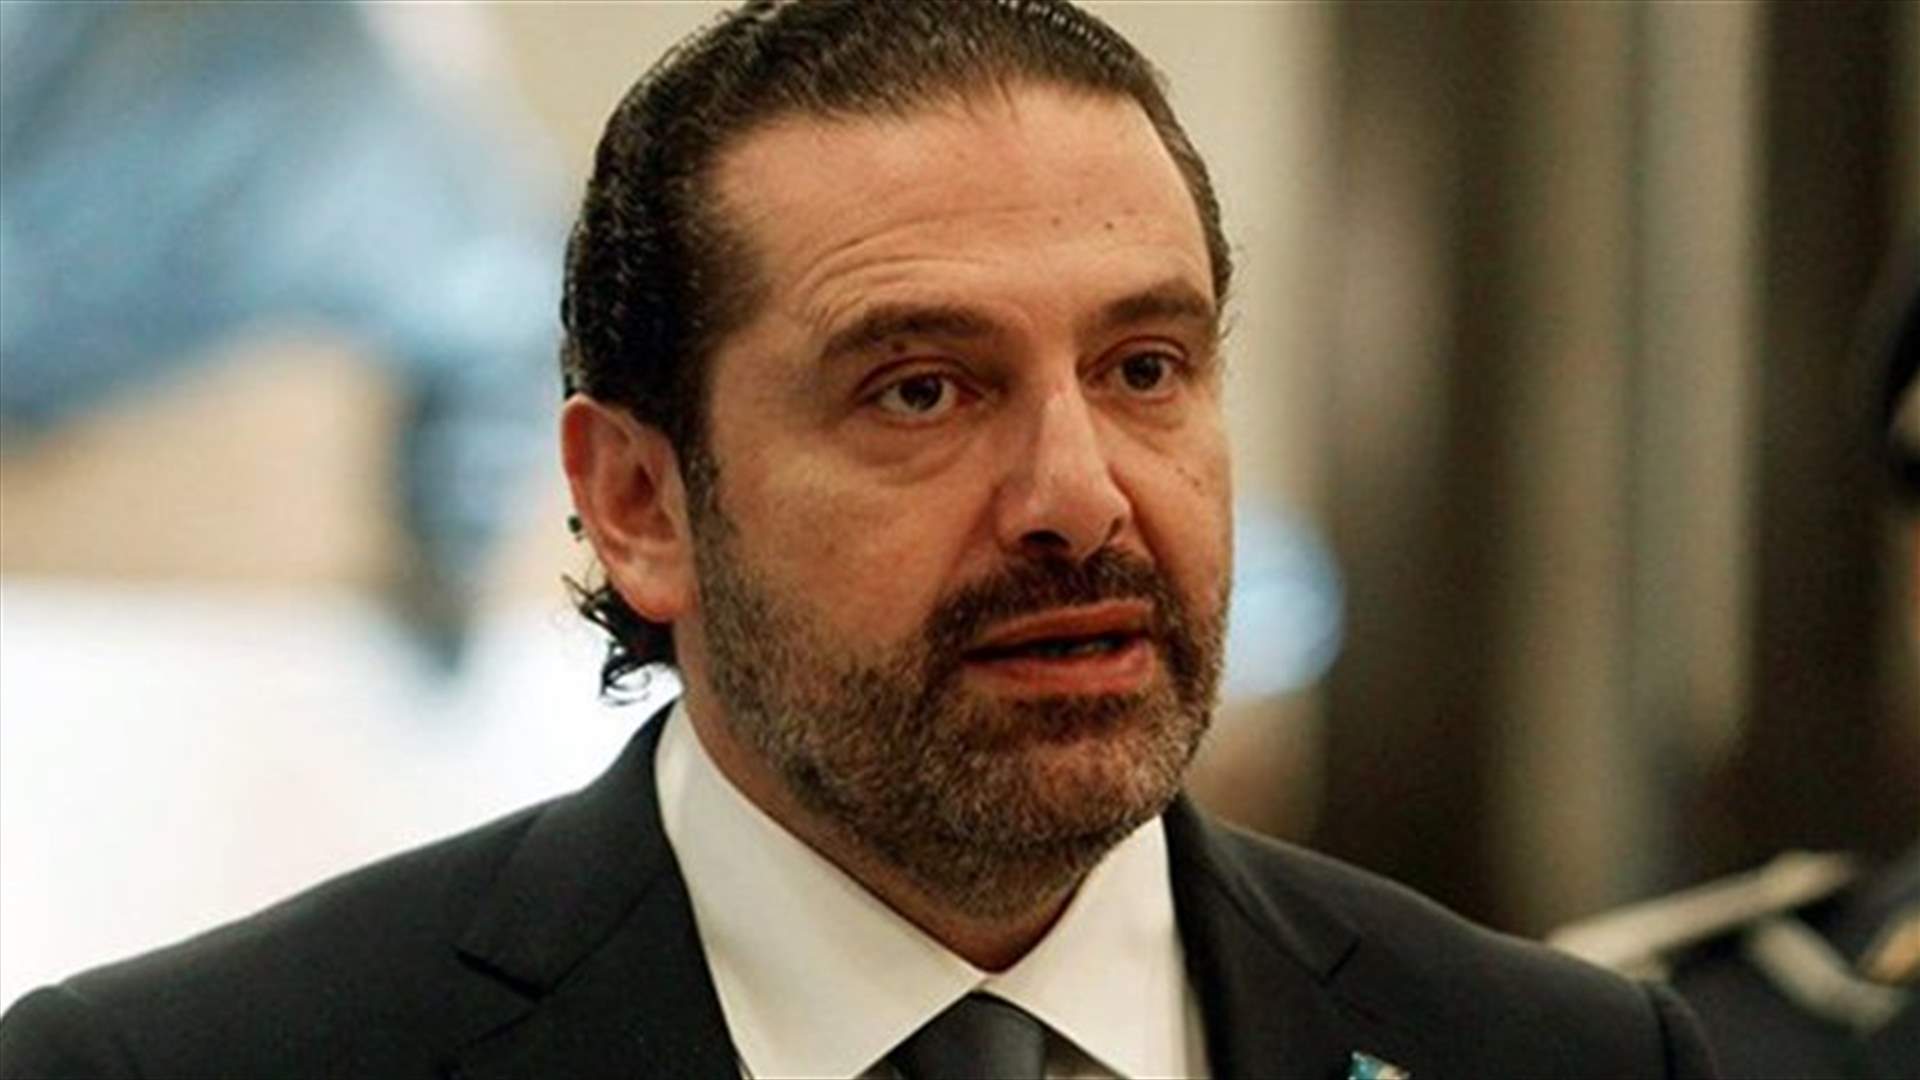 PM Hariri undergoes a cardiac catheterization surgery in Paris